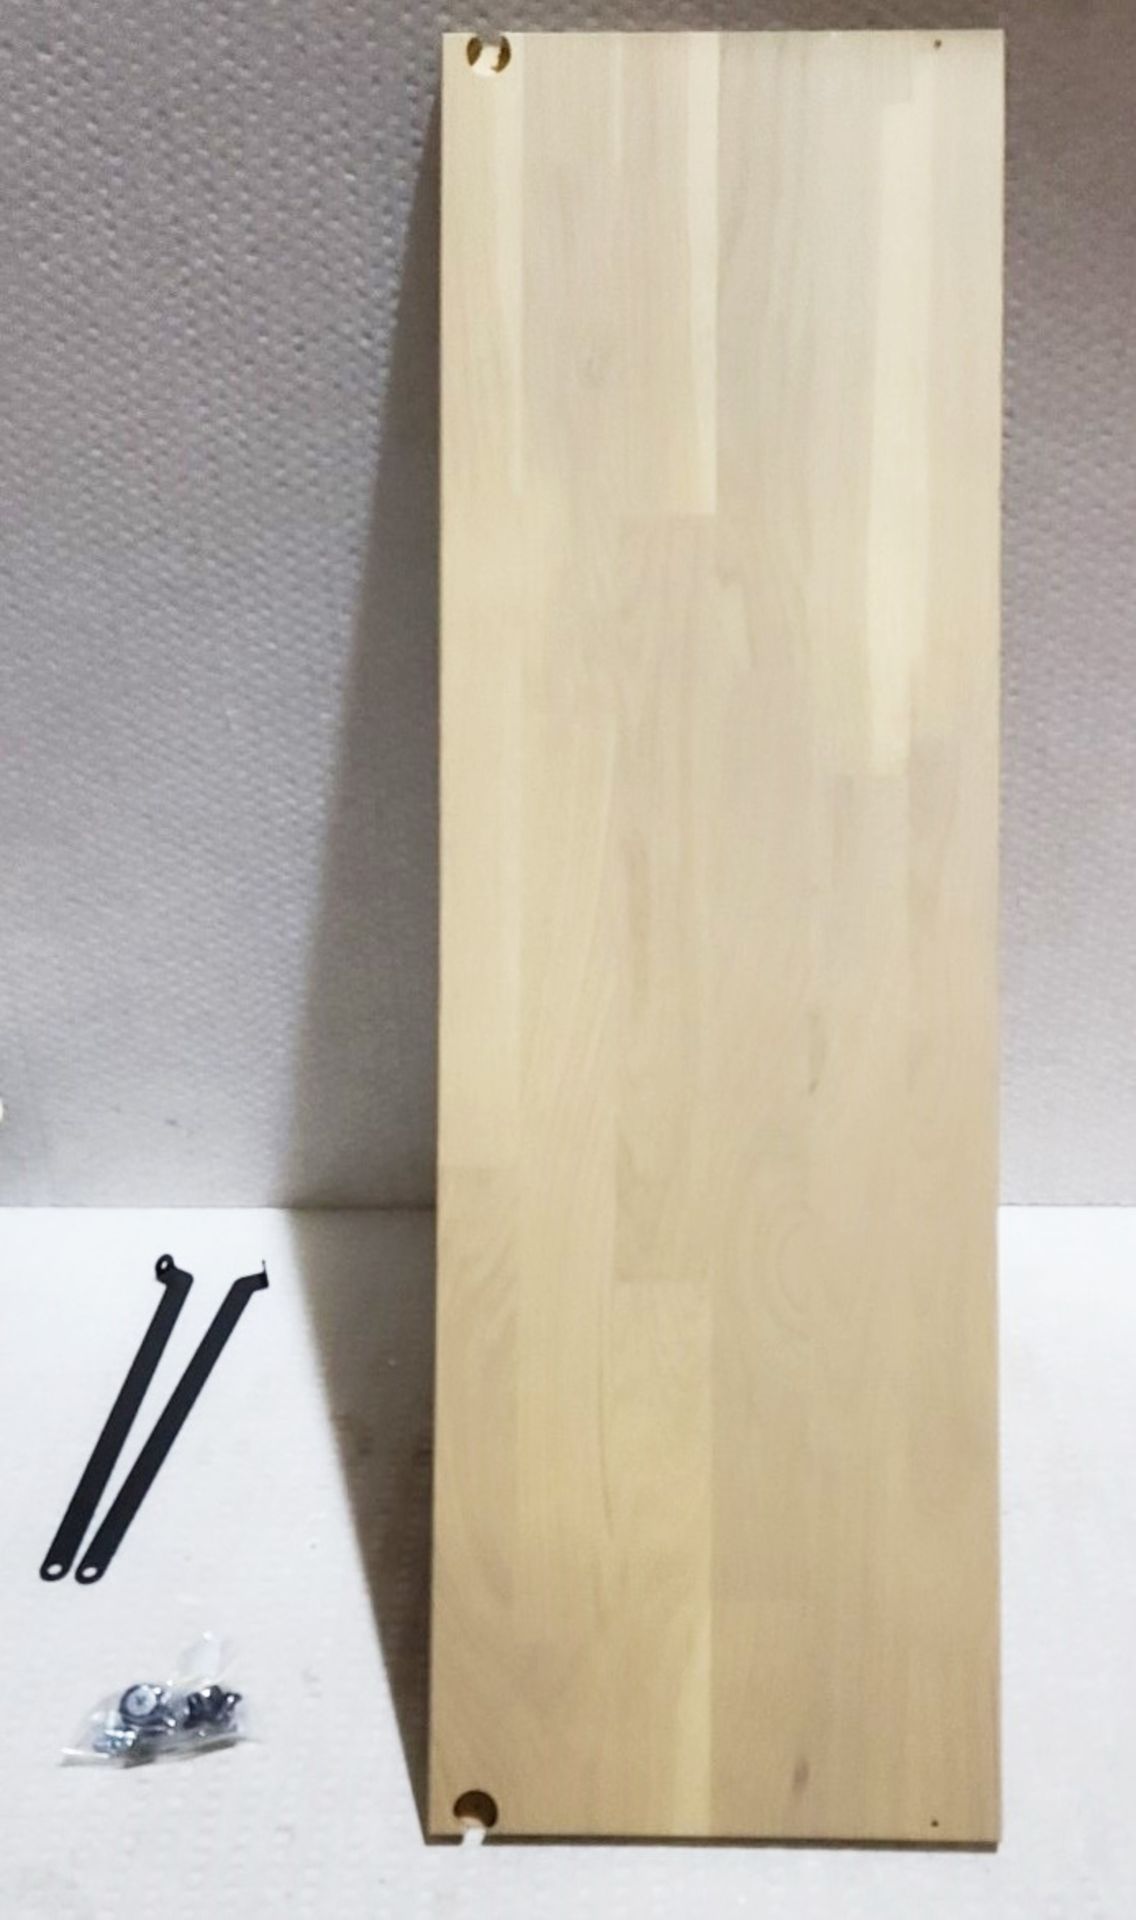 1 x WOOOD 'Gyan Legplank' Light Oak Shelf With Black Metal Braces 80cm - Image 4 of 7